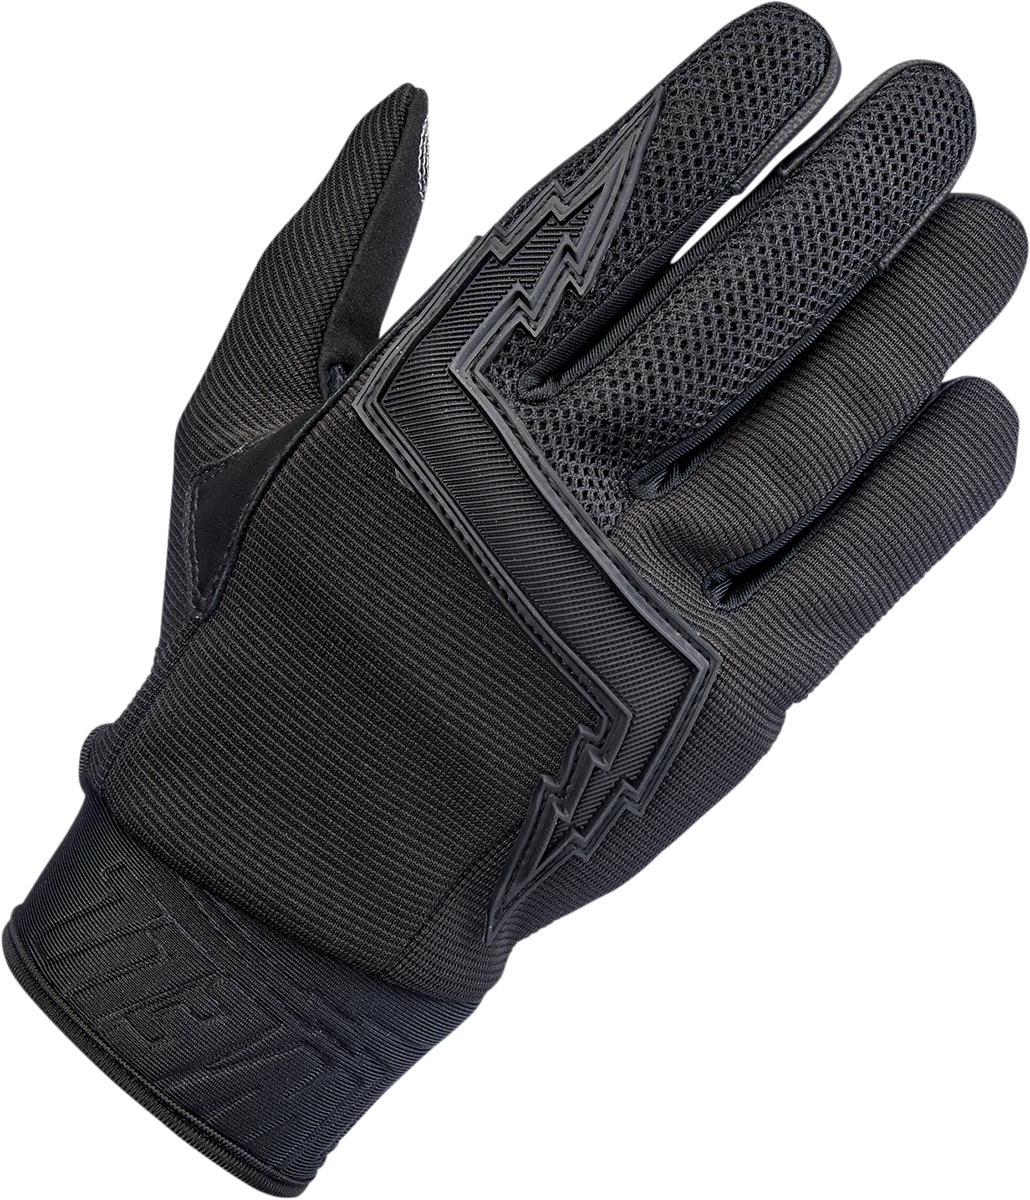 BILTWELL Baja Gloves - Black Out - Medium 1508-0101-303